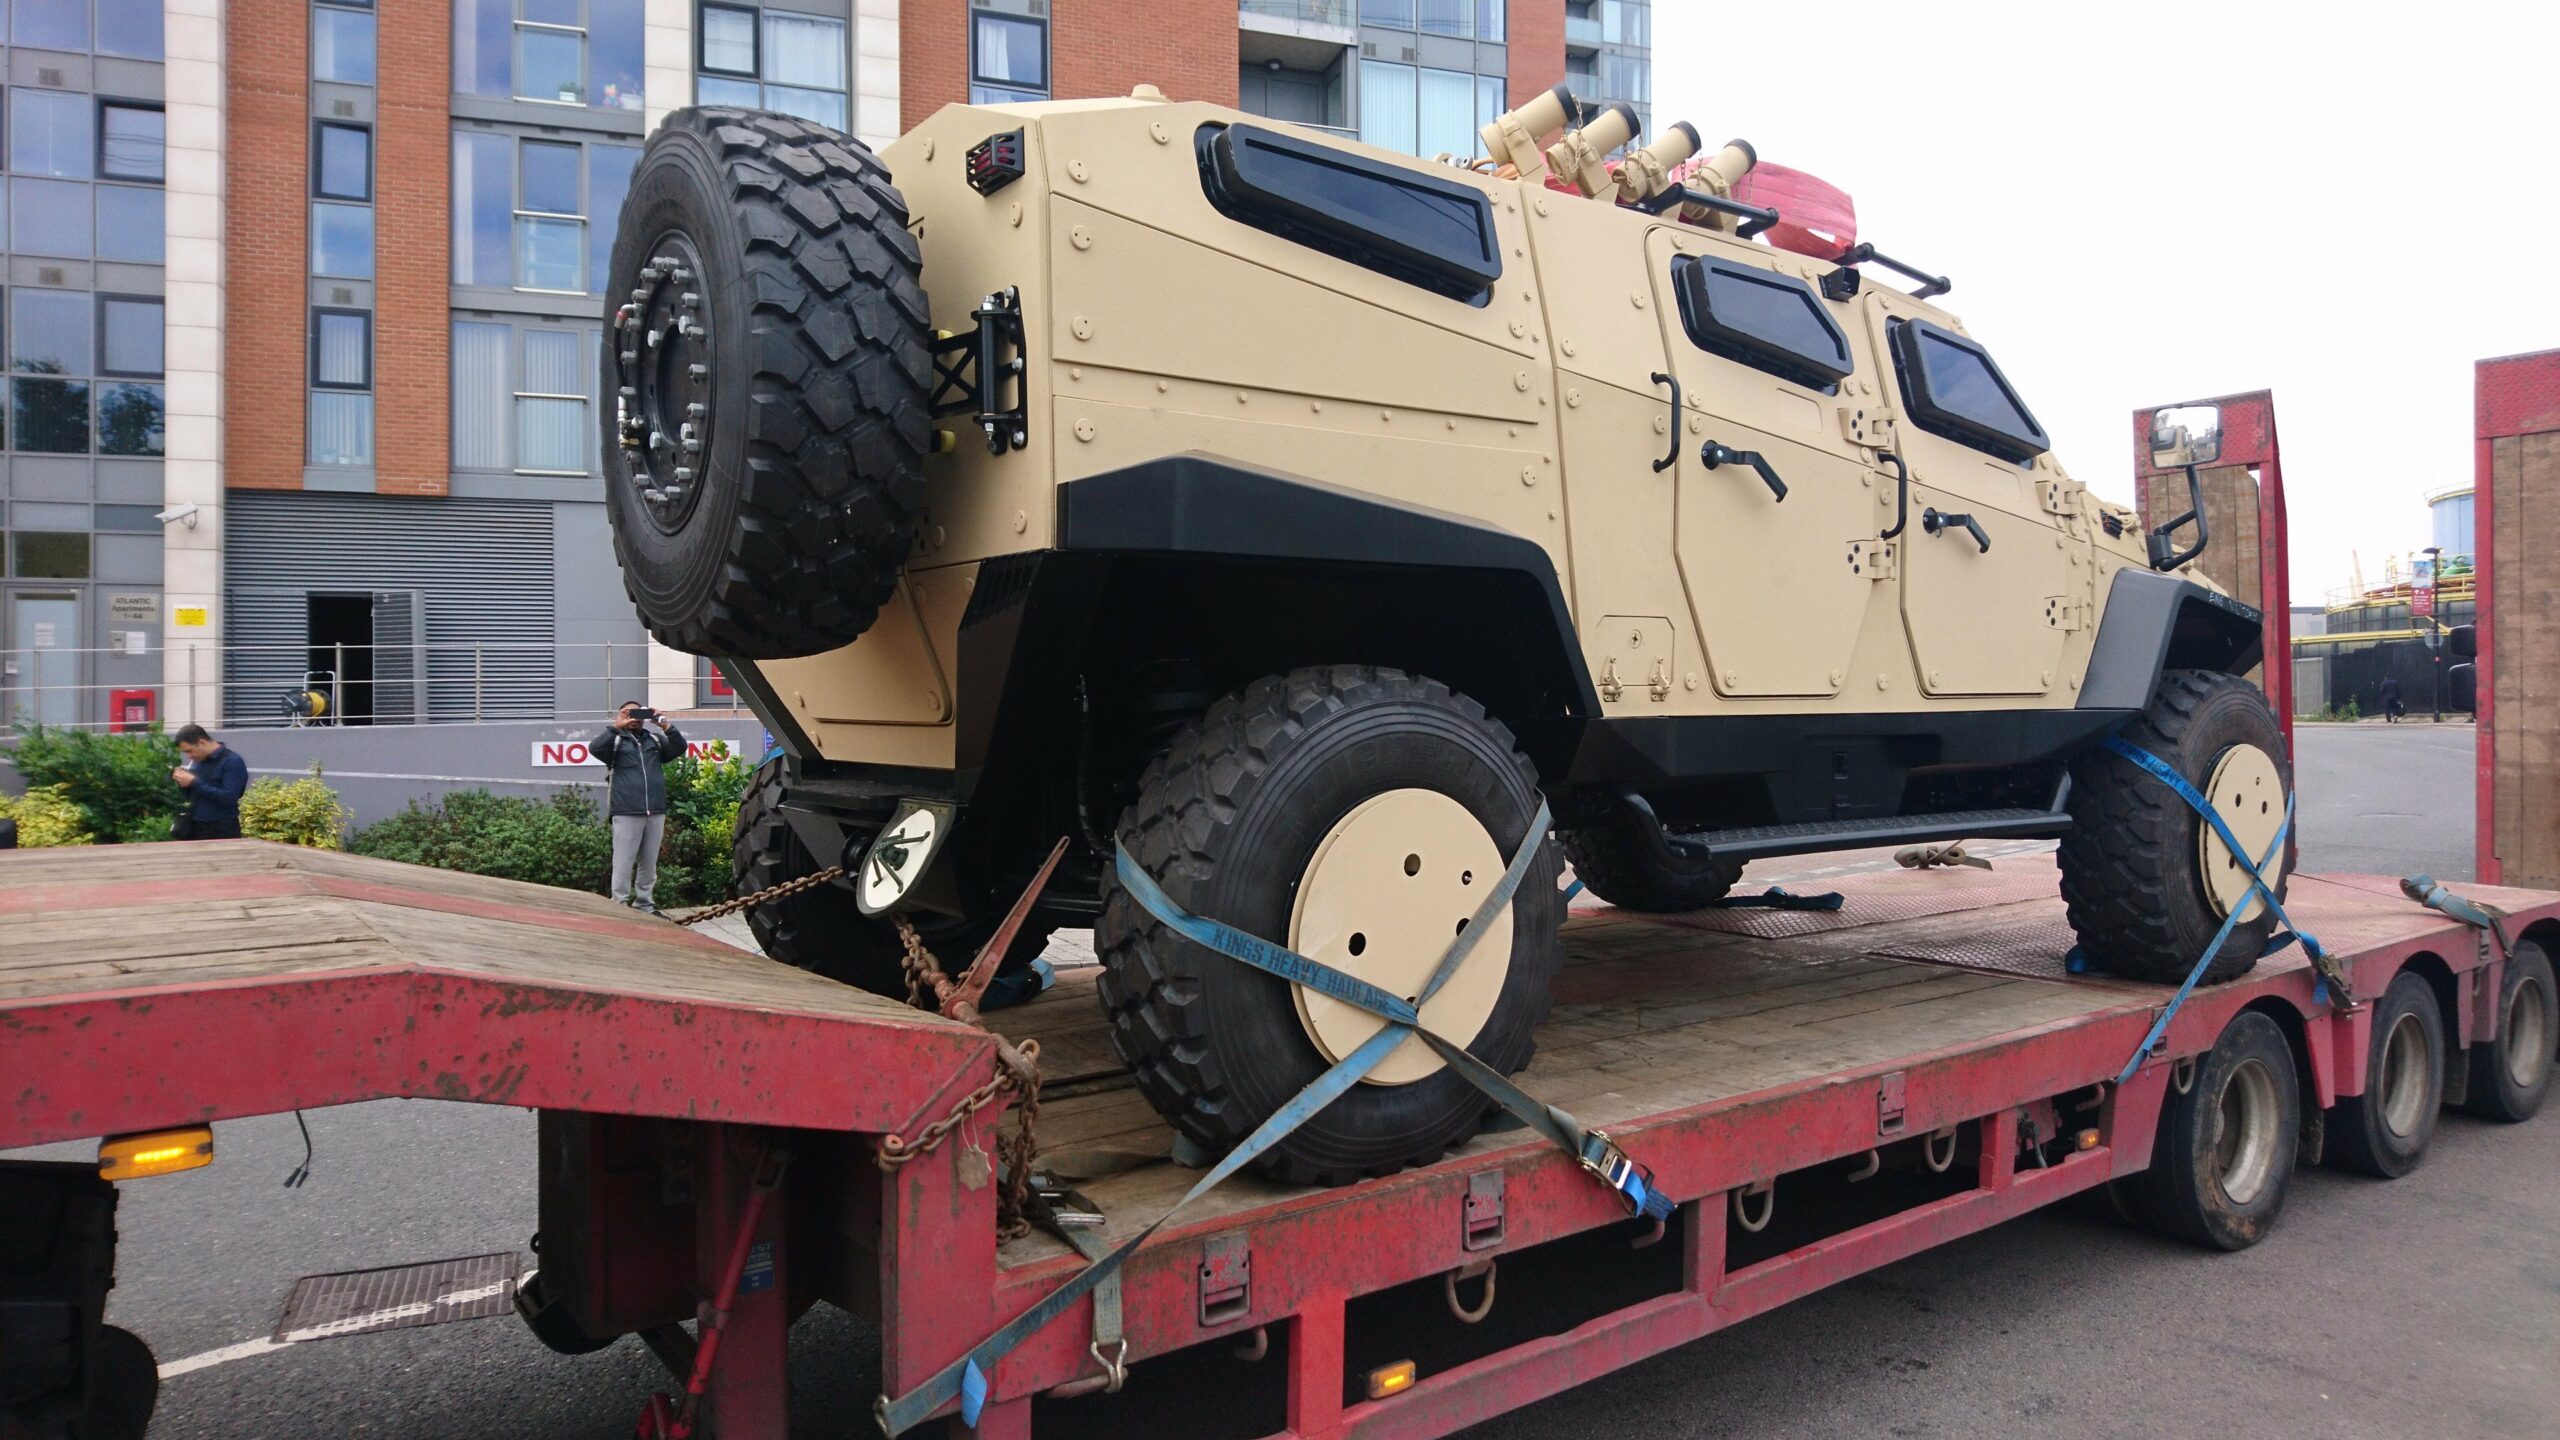 A Nurol armoured vehicle on its way into DSEI 2017